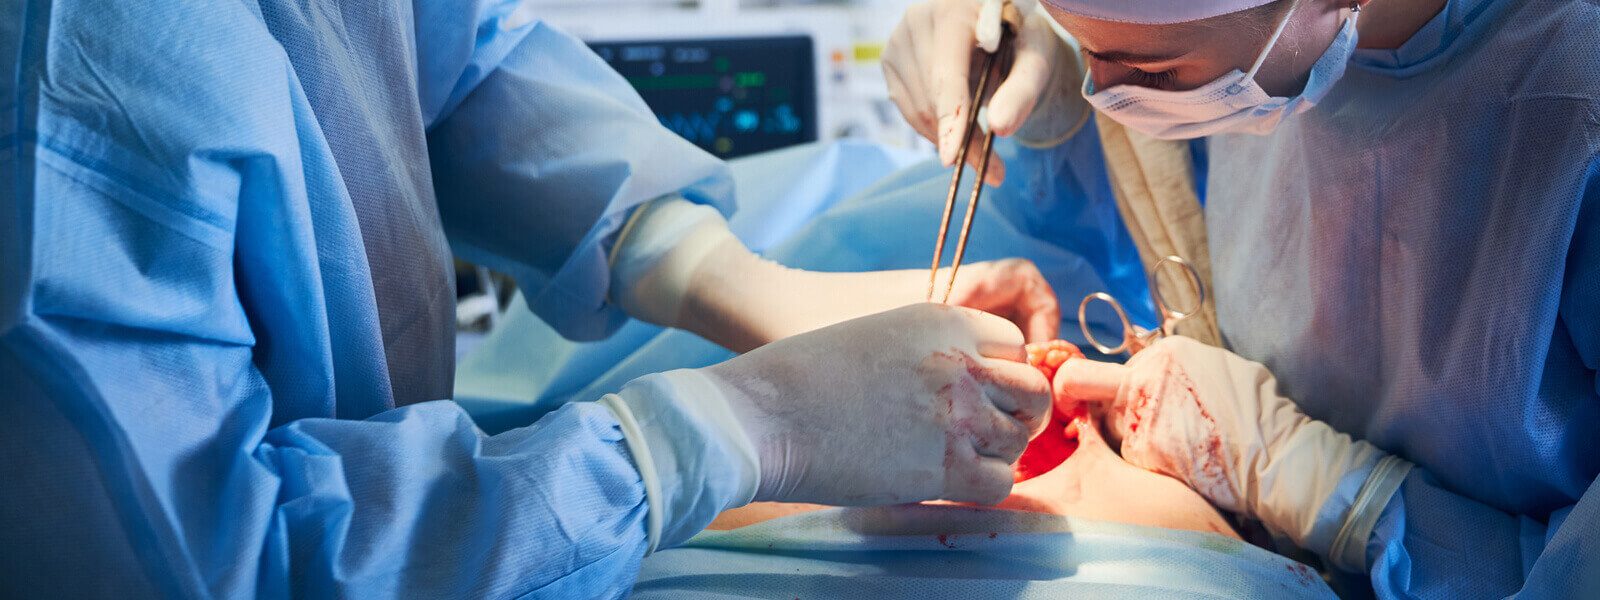 Cardiothoracic and Vascular Surgery